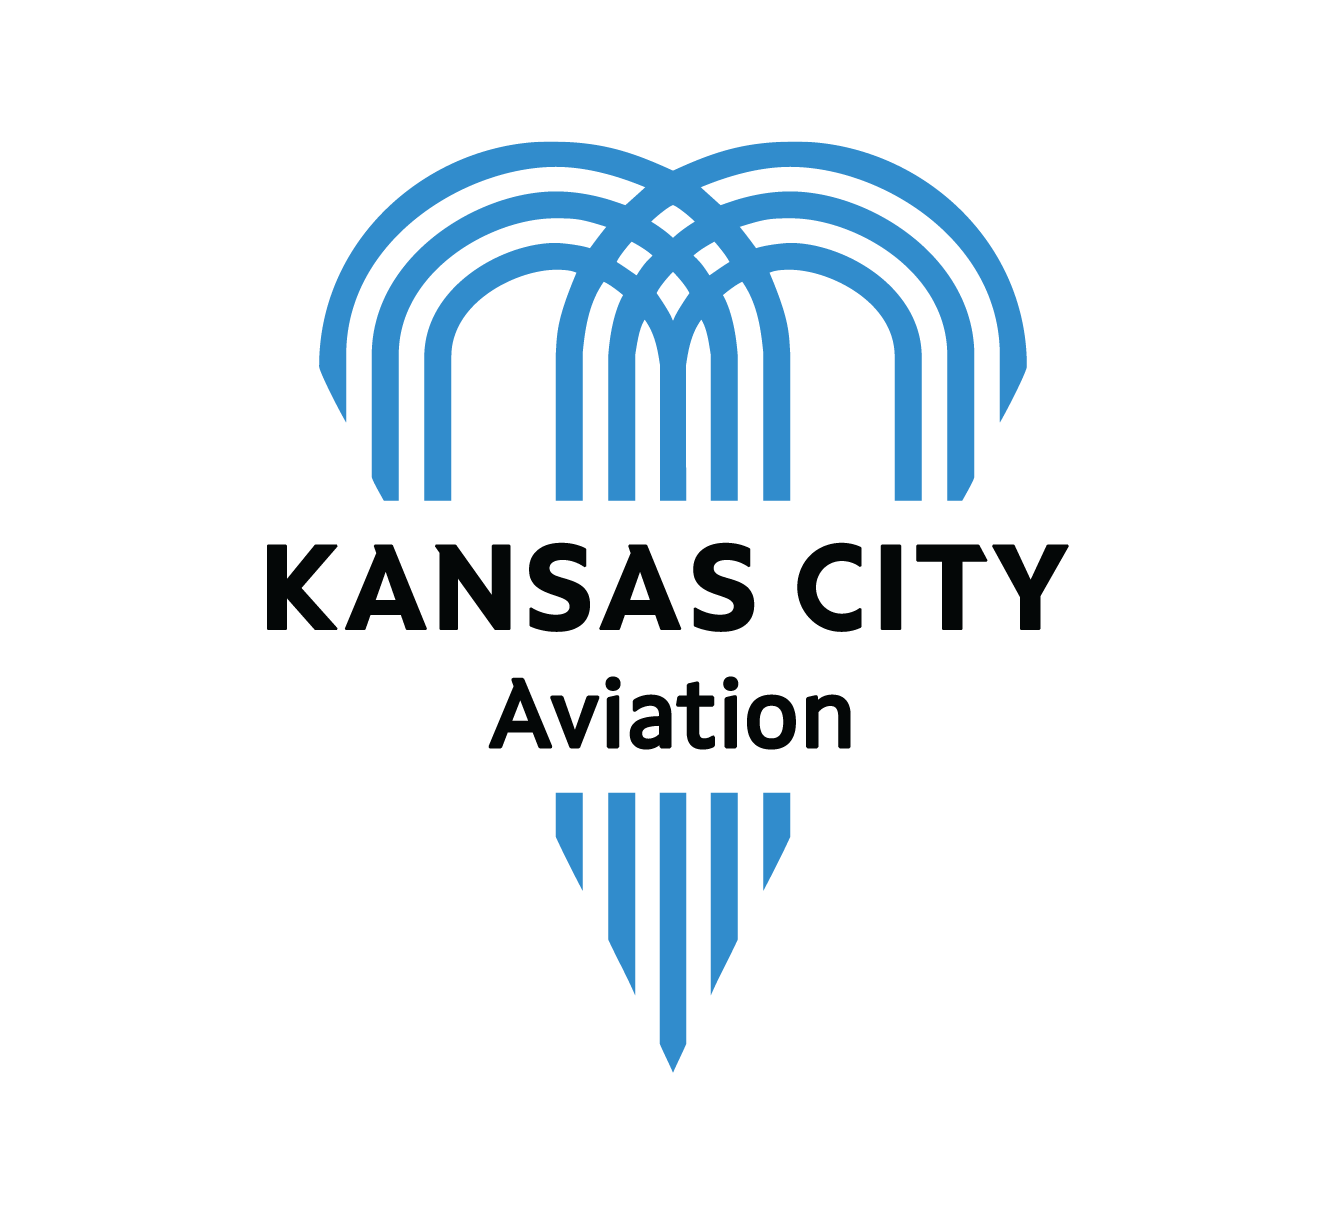 KC Aviation Logo - Blue Fountain with Black Text